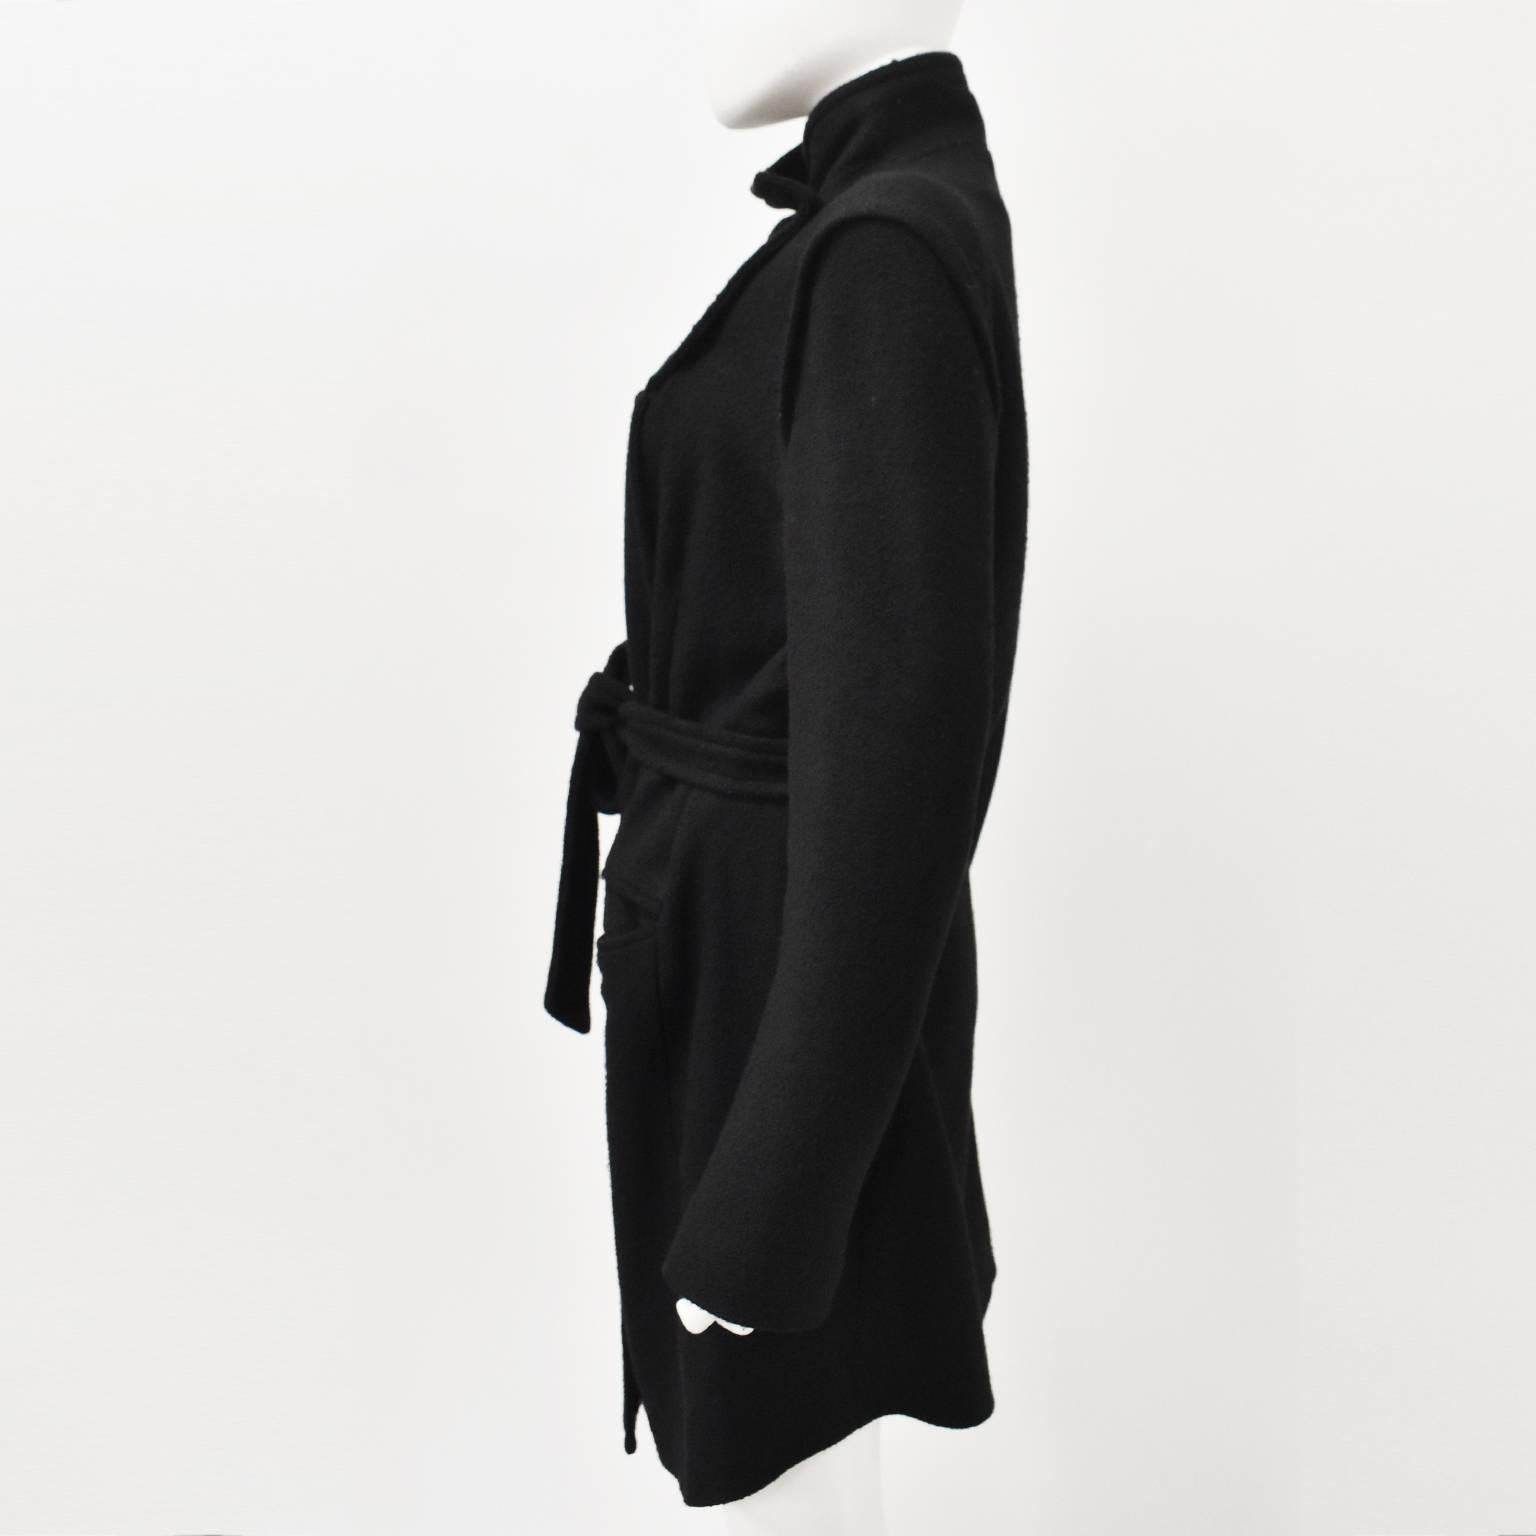 Ann Demeulemeester Black Asymmetric Coat with Collar Details and Tie Waist  2